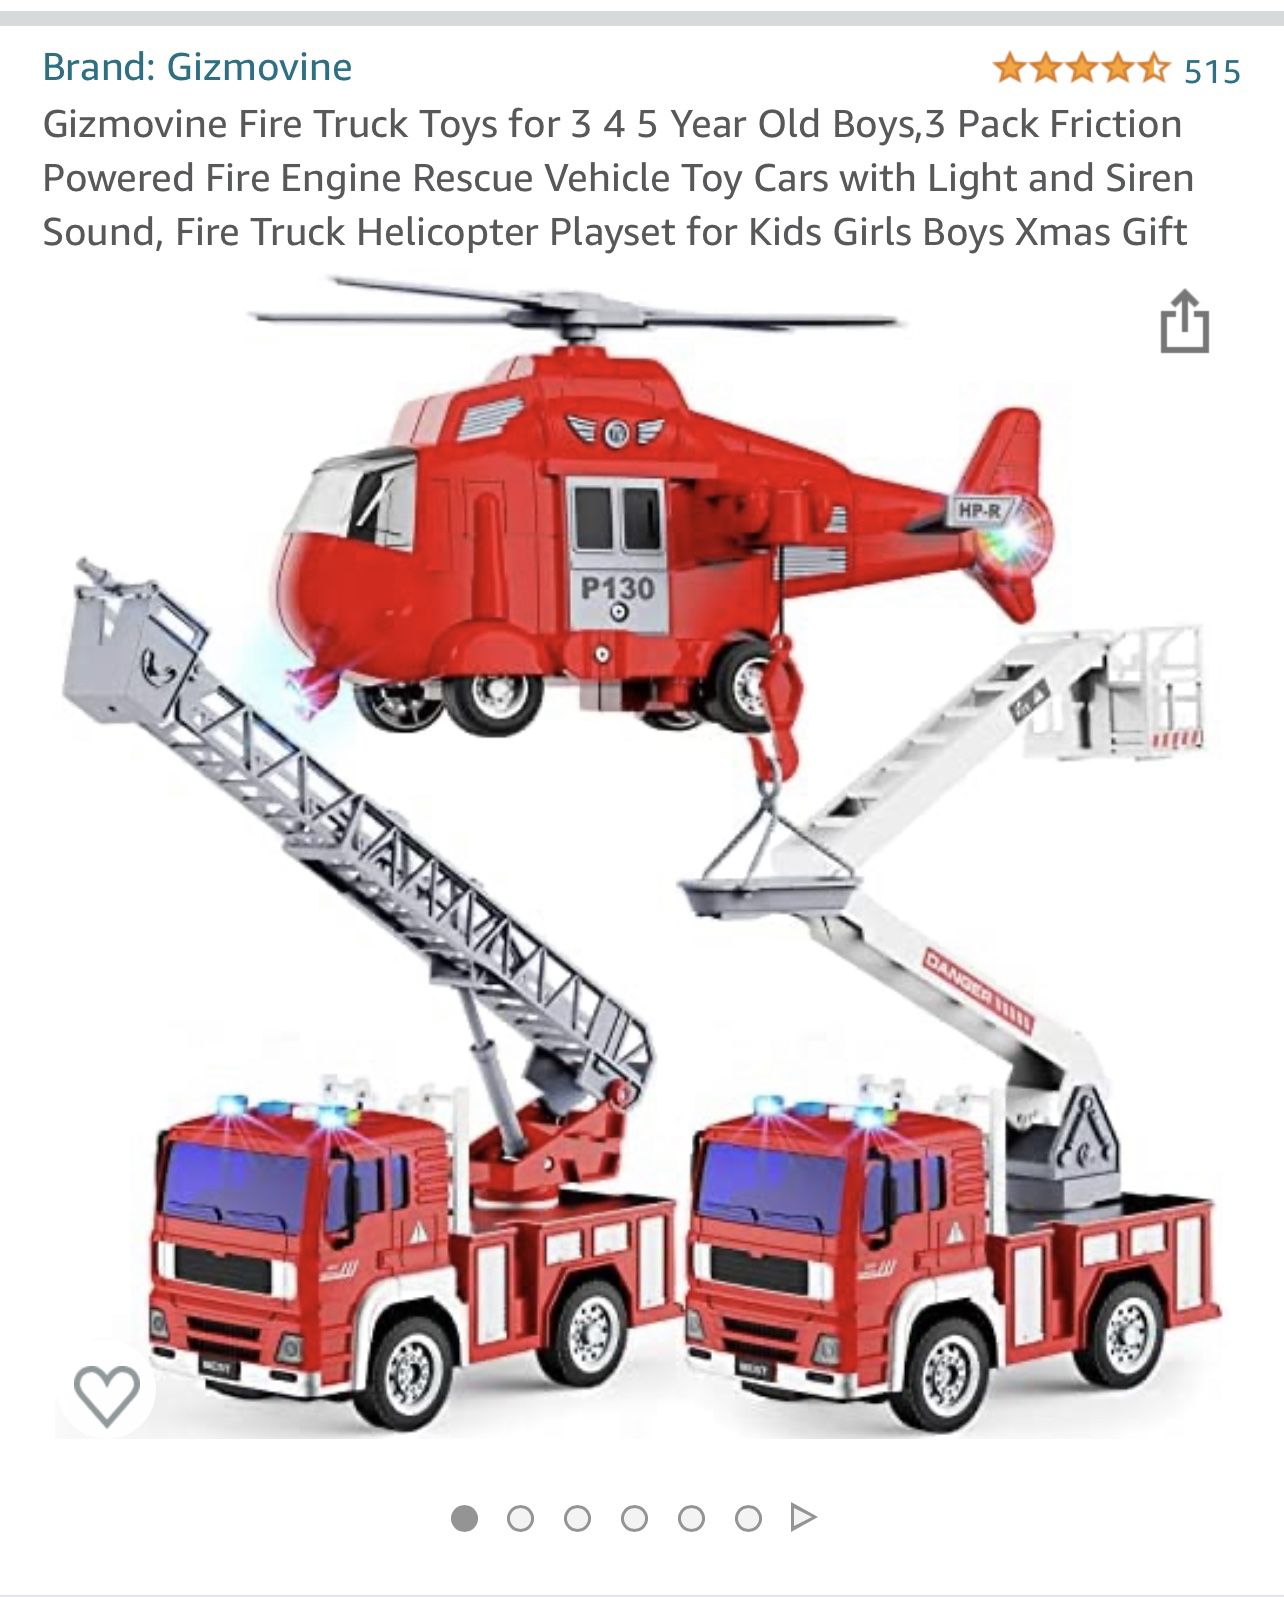 Gizmovine Fire Truck Toys